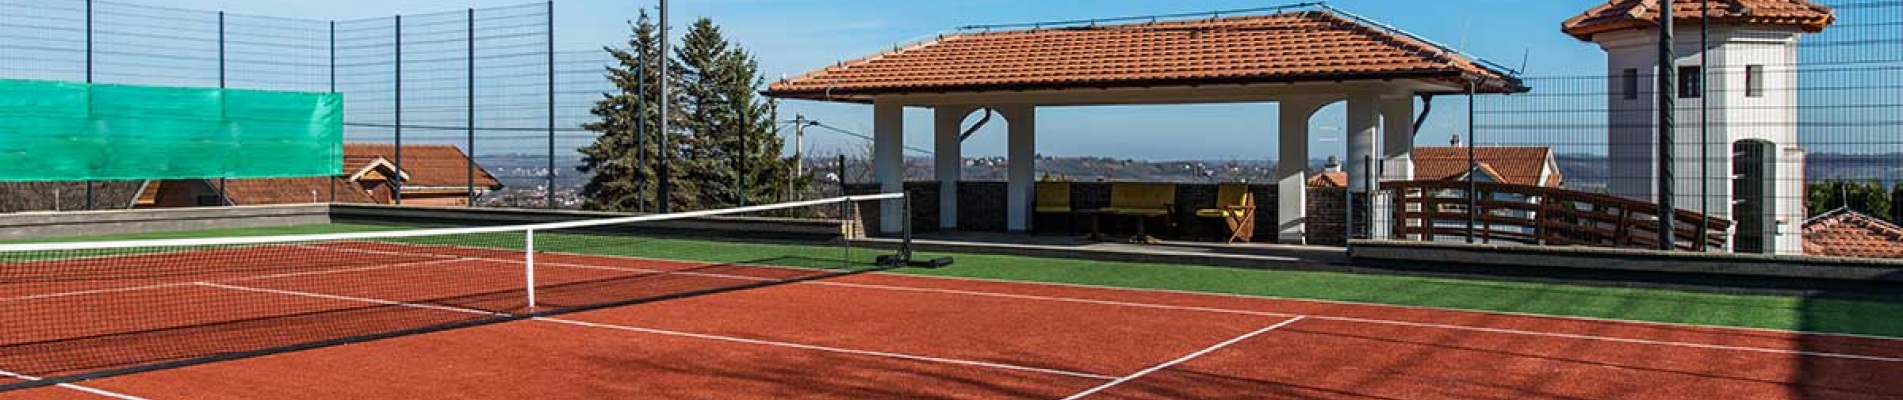 La Construction d'un Terrain de Tennis en Gazon Artificiel